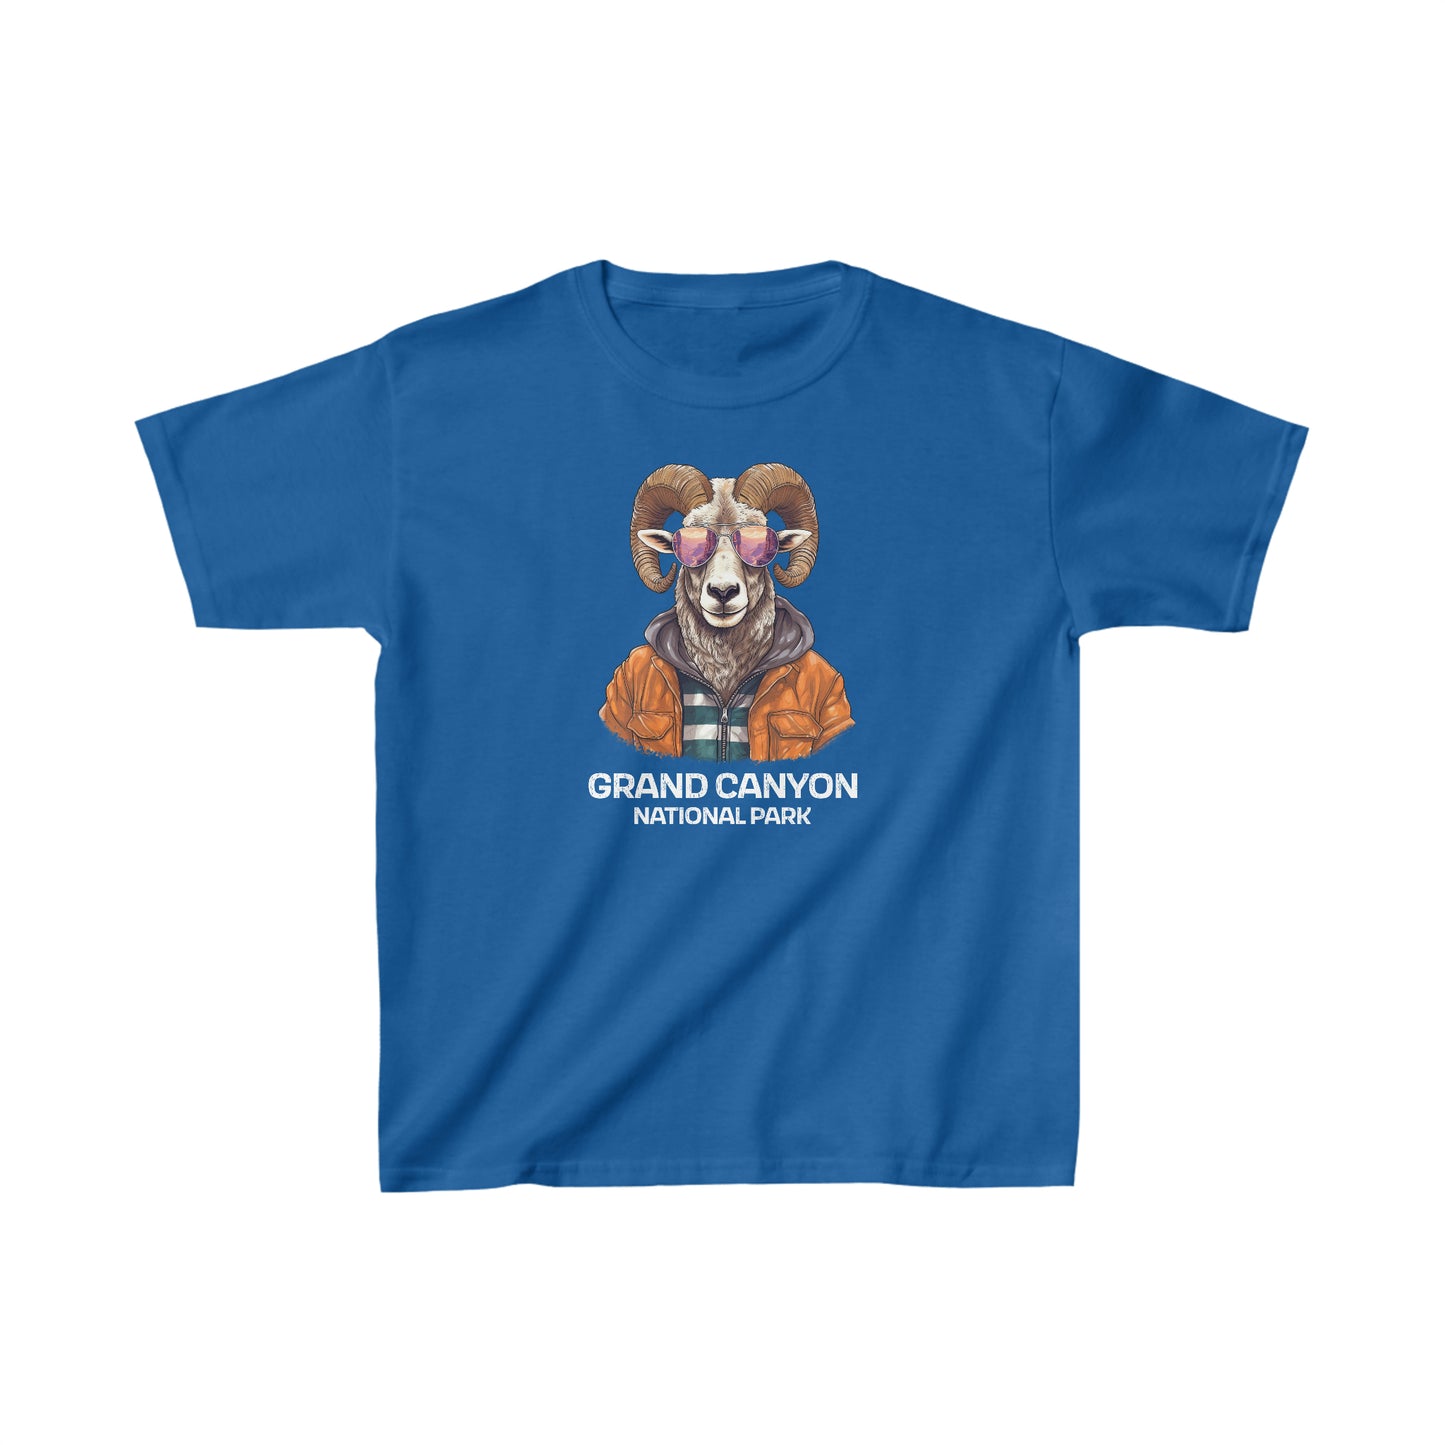 Grand Canyon National Park Child T-Shirt - Cool Bighorn Sheep